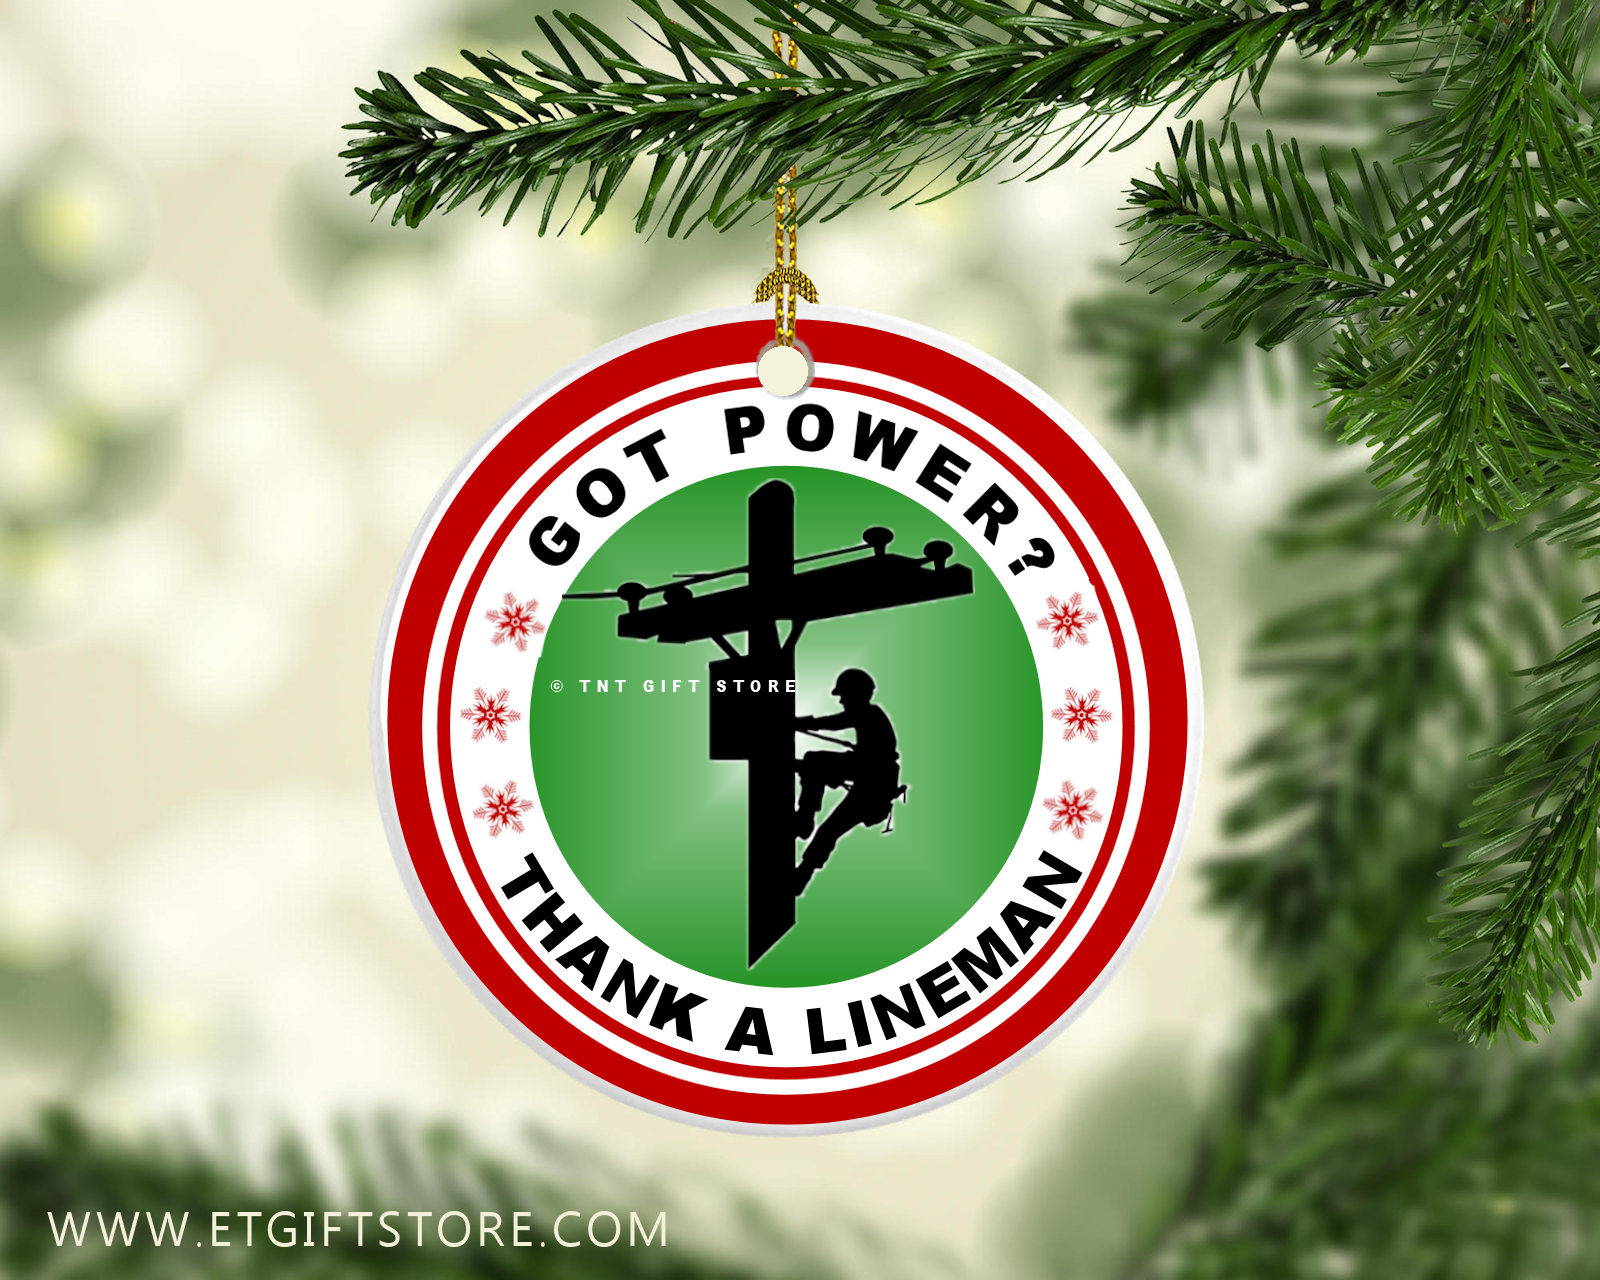 Got Power? Thank a Lineman Christmas Tree Ornament